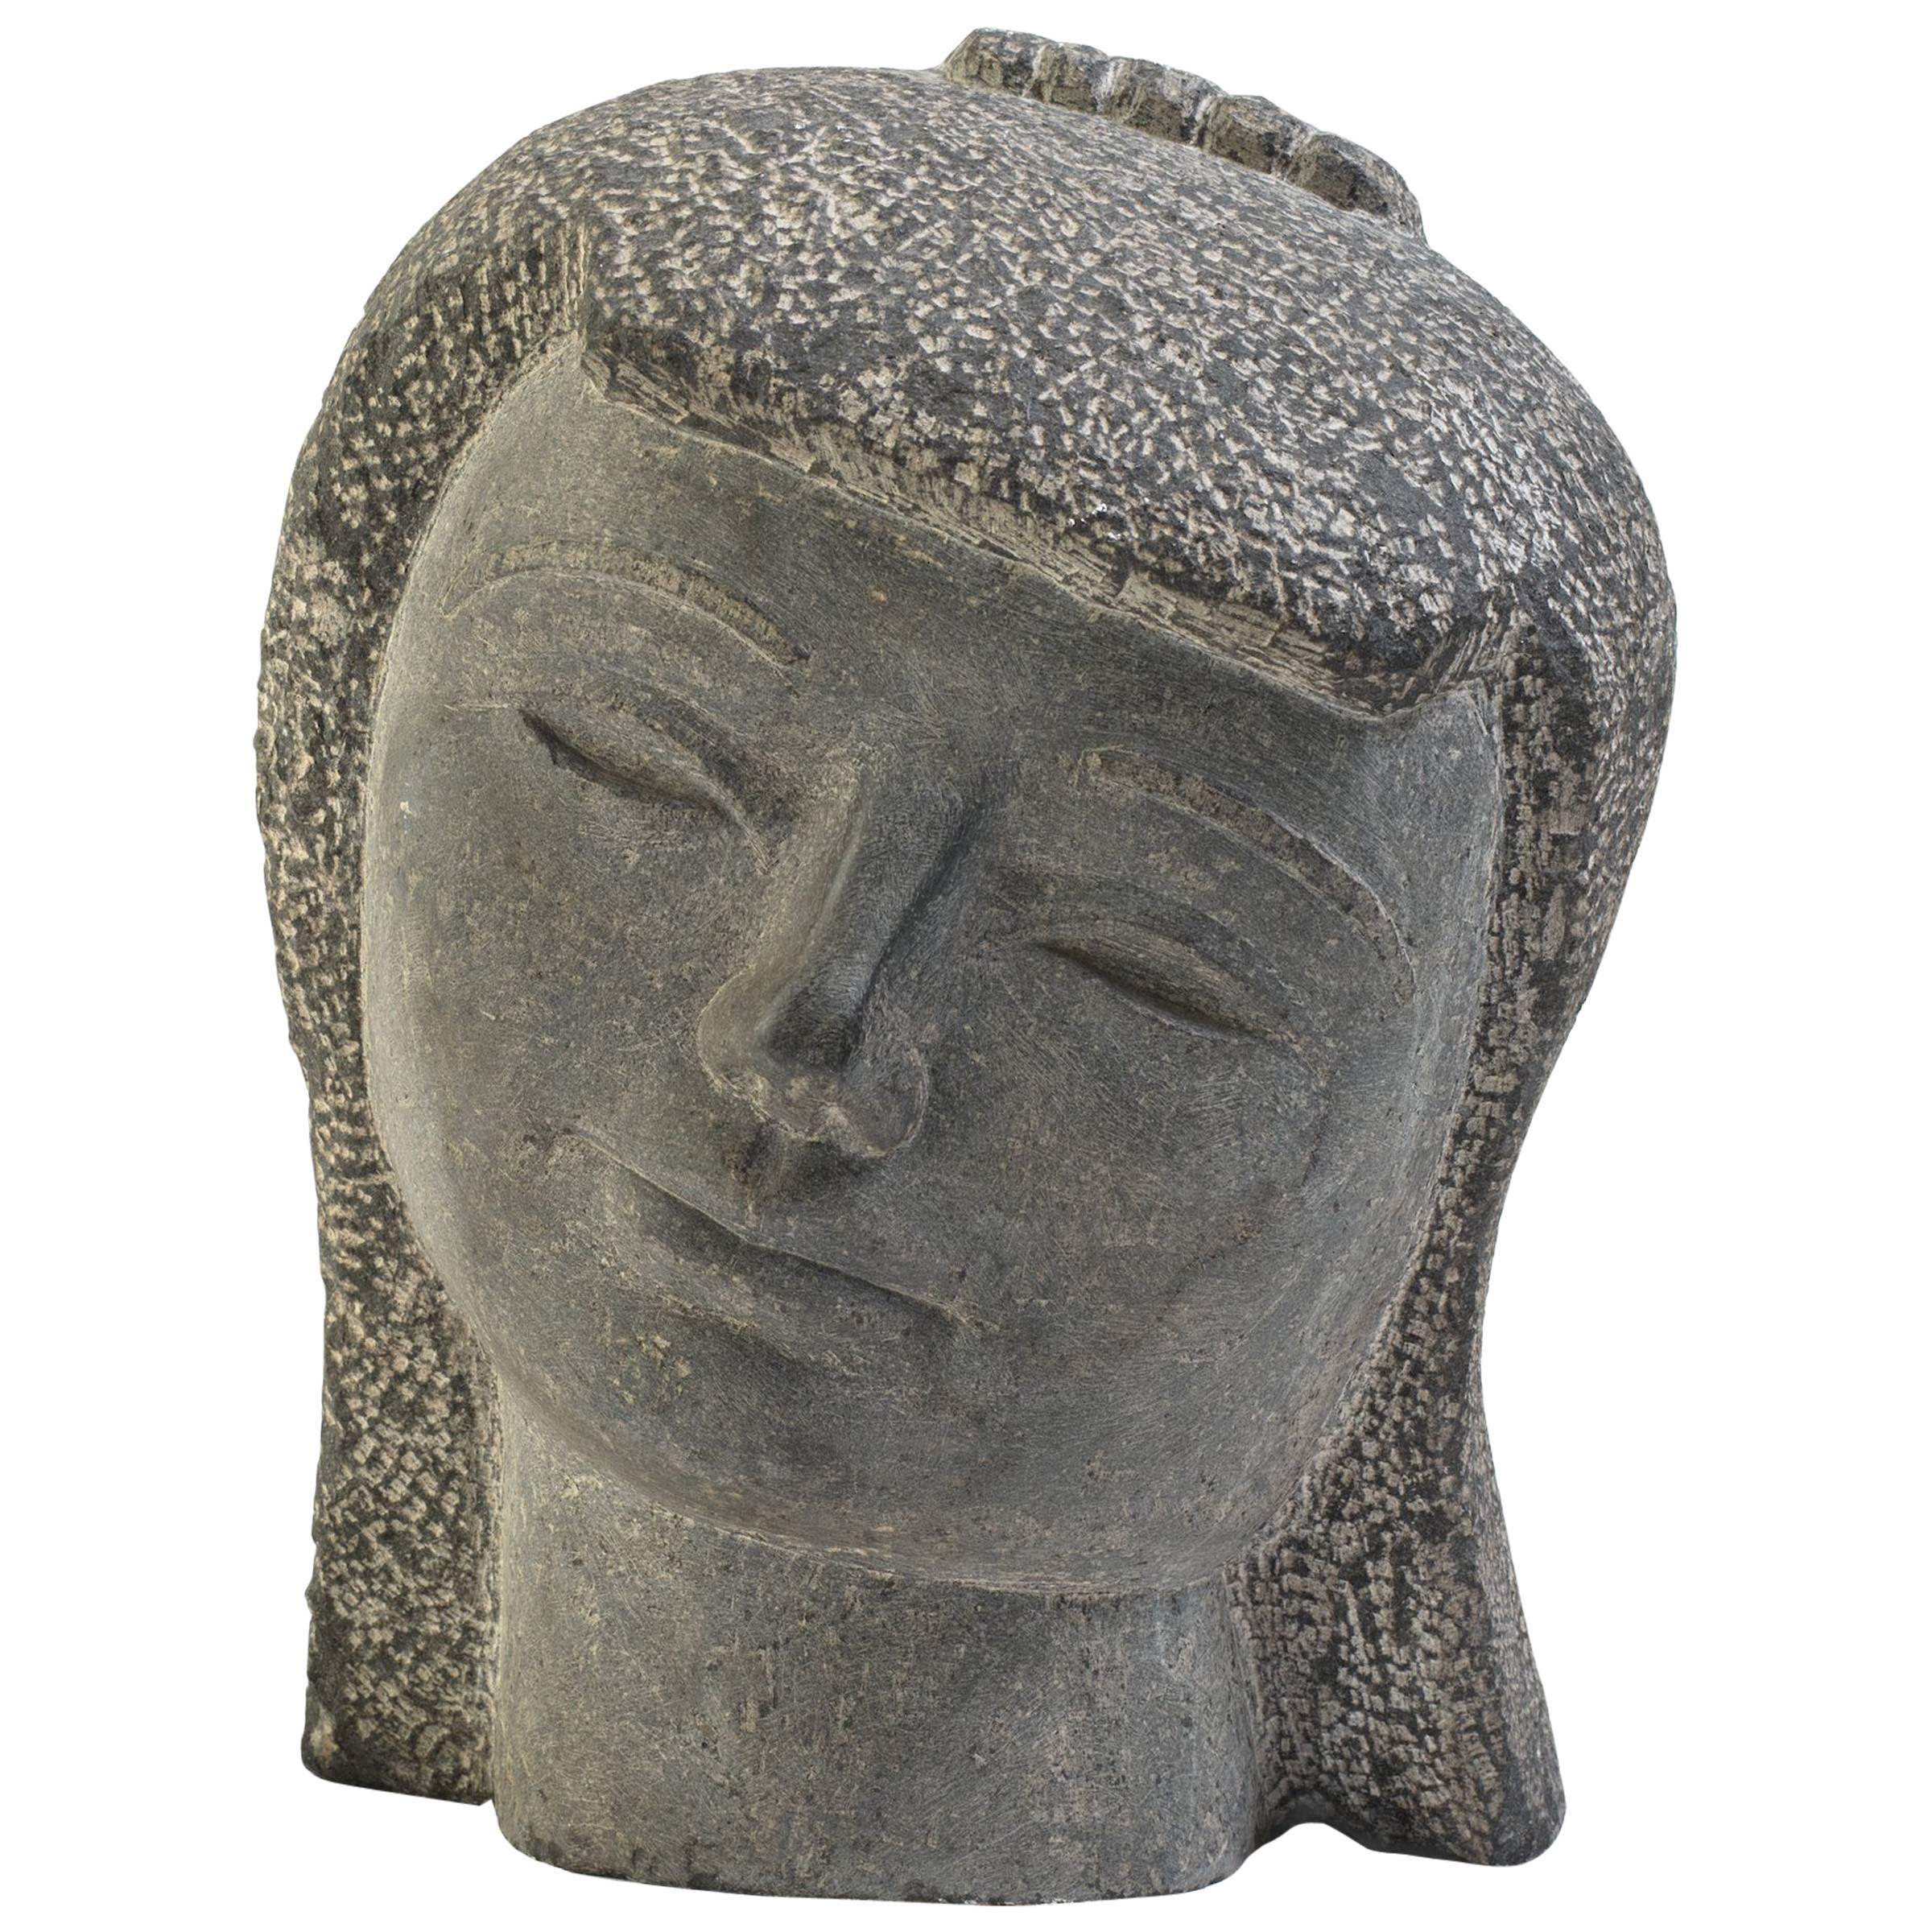 Carved Stone Kwan Yin Head